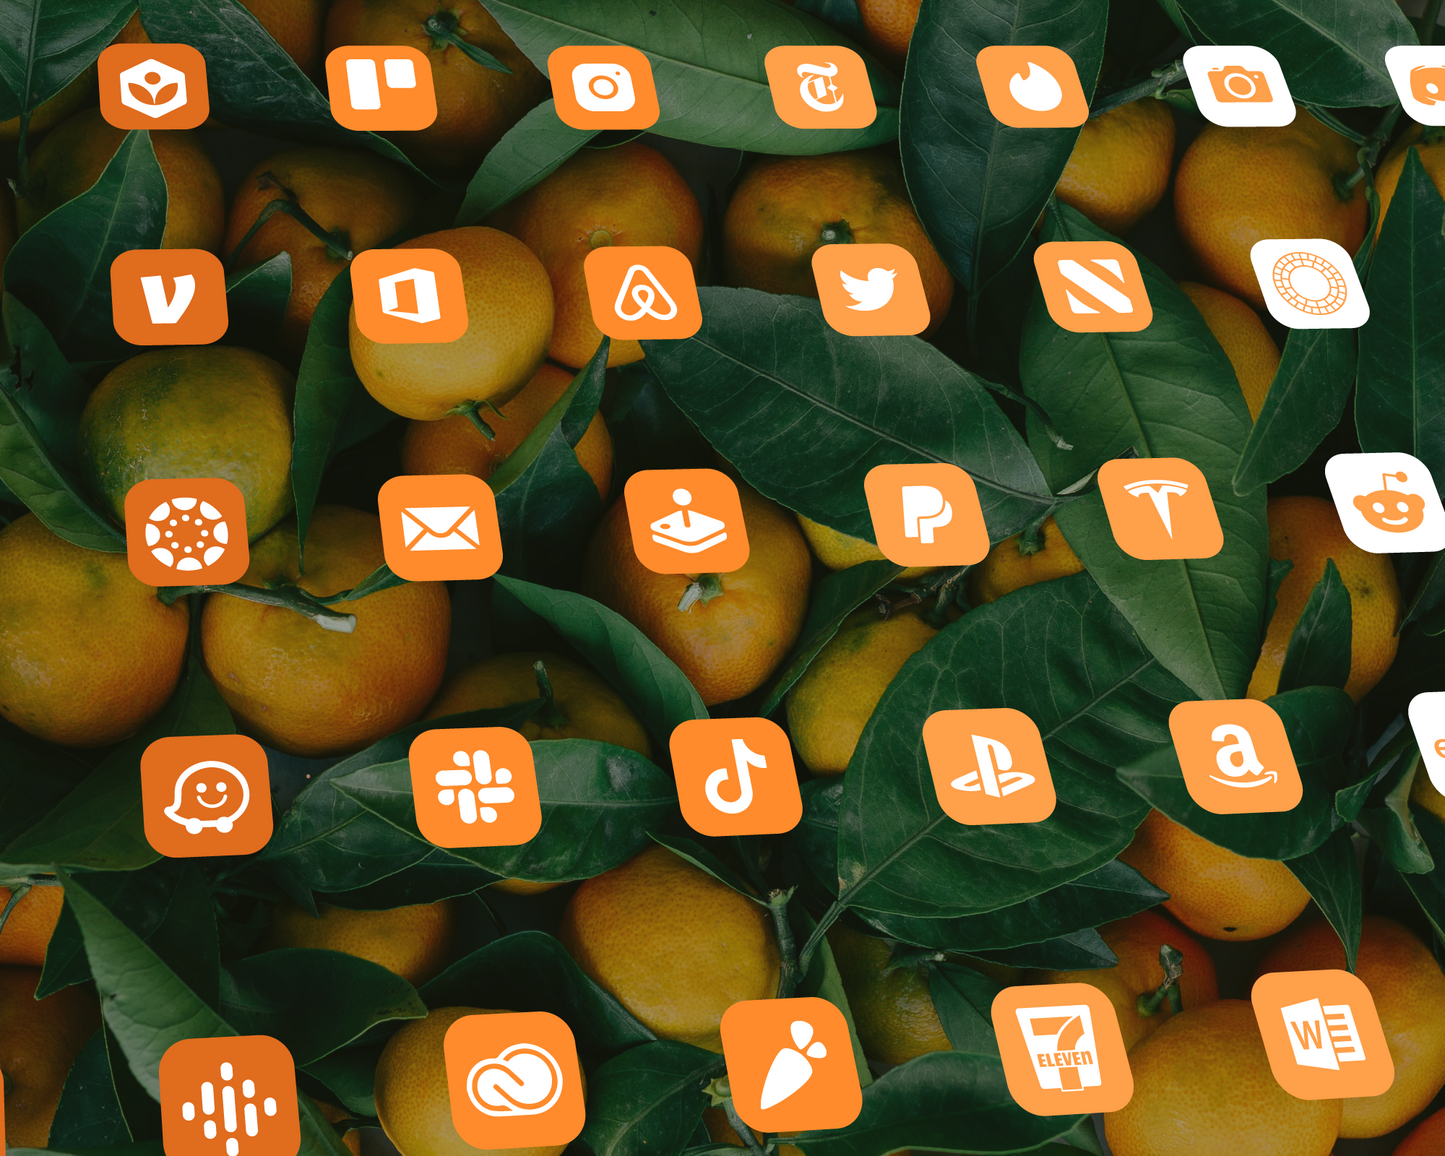 Tangerine Orange App Icon Pack for iOS